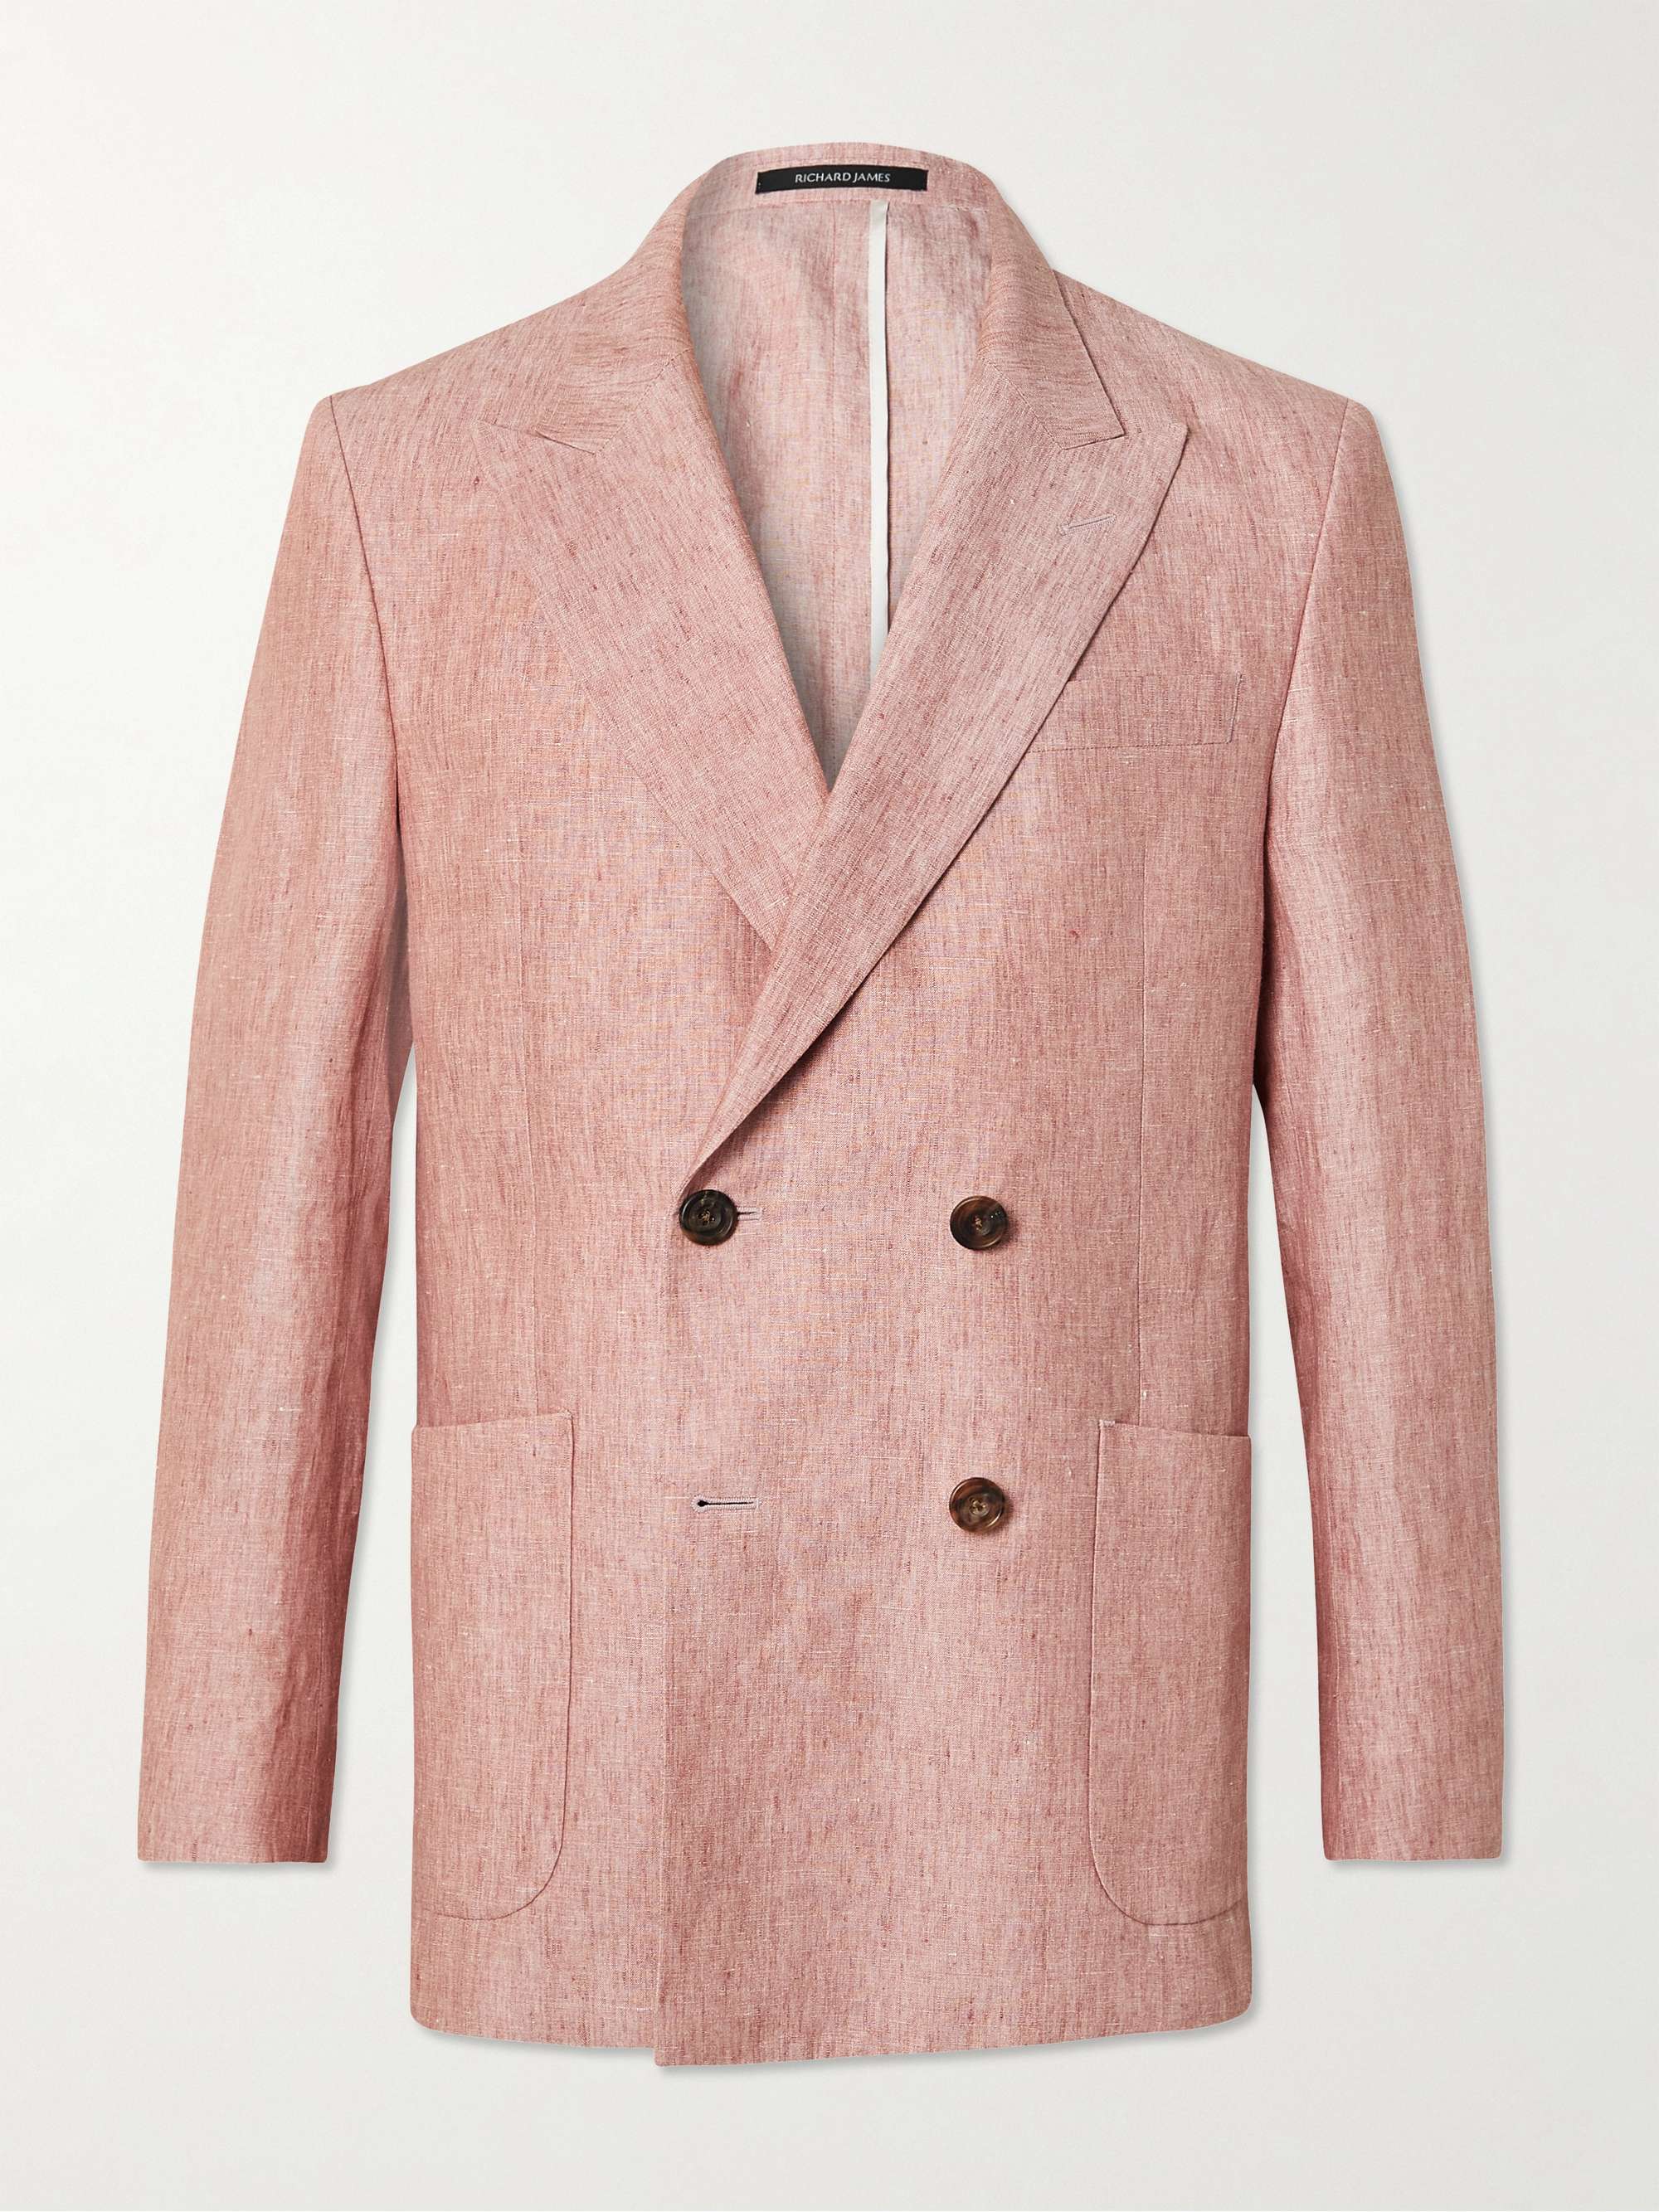 RICHARD JAMES Unstructured Washed-Linen Suit Jacket